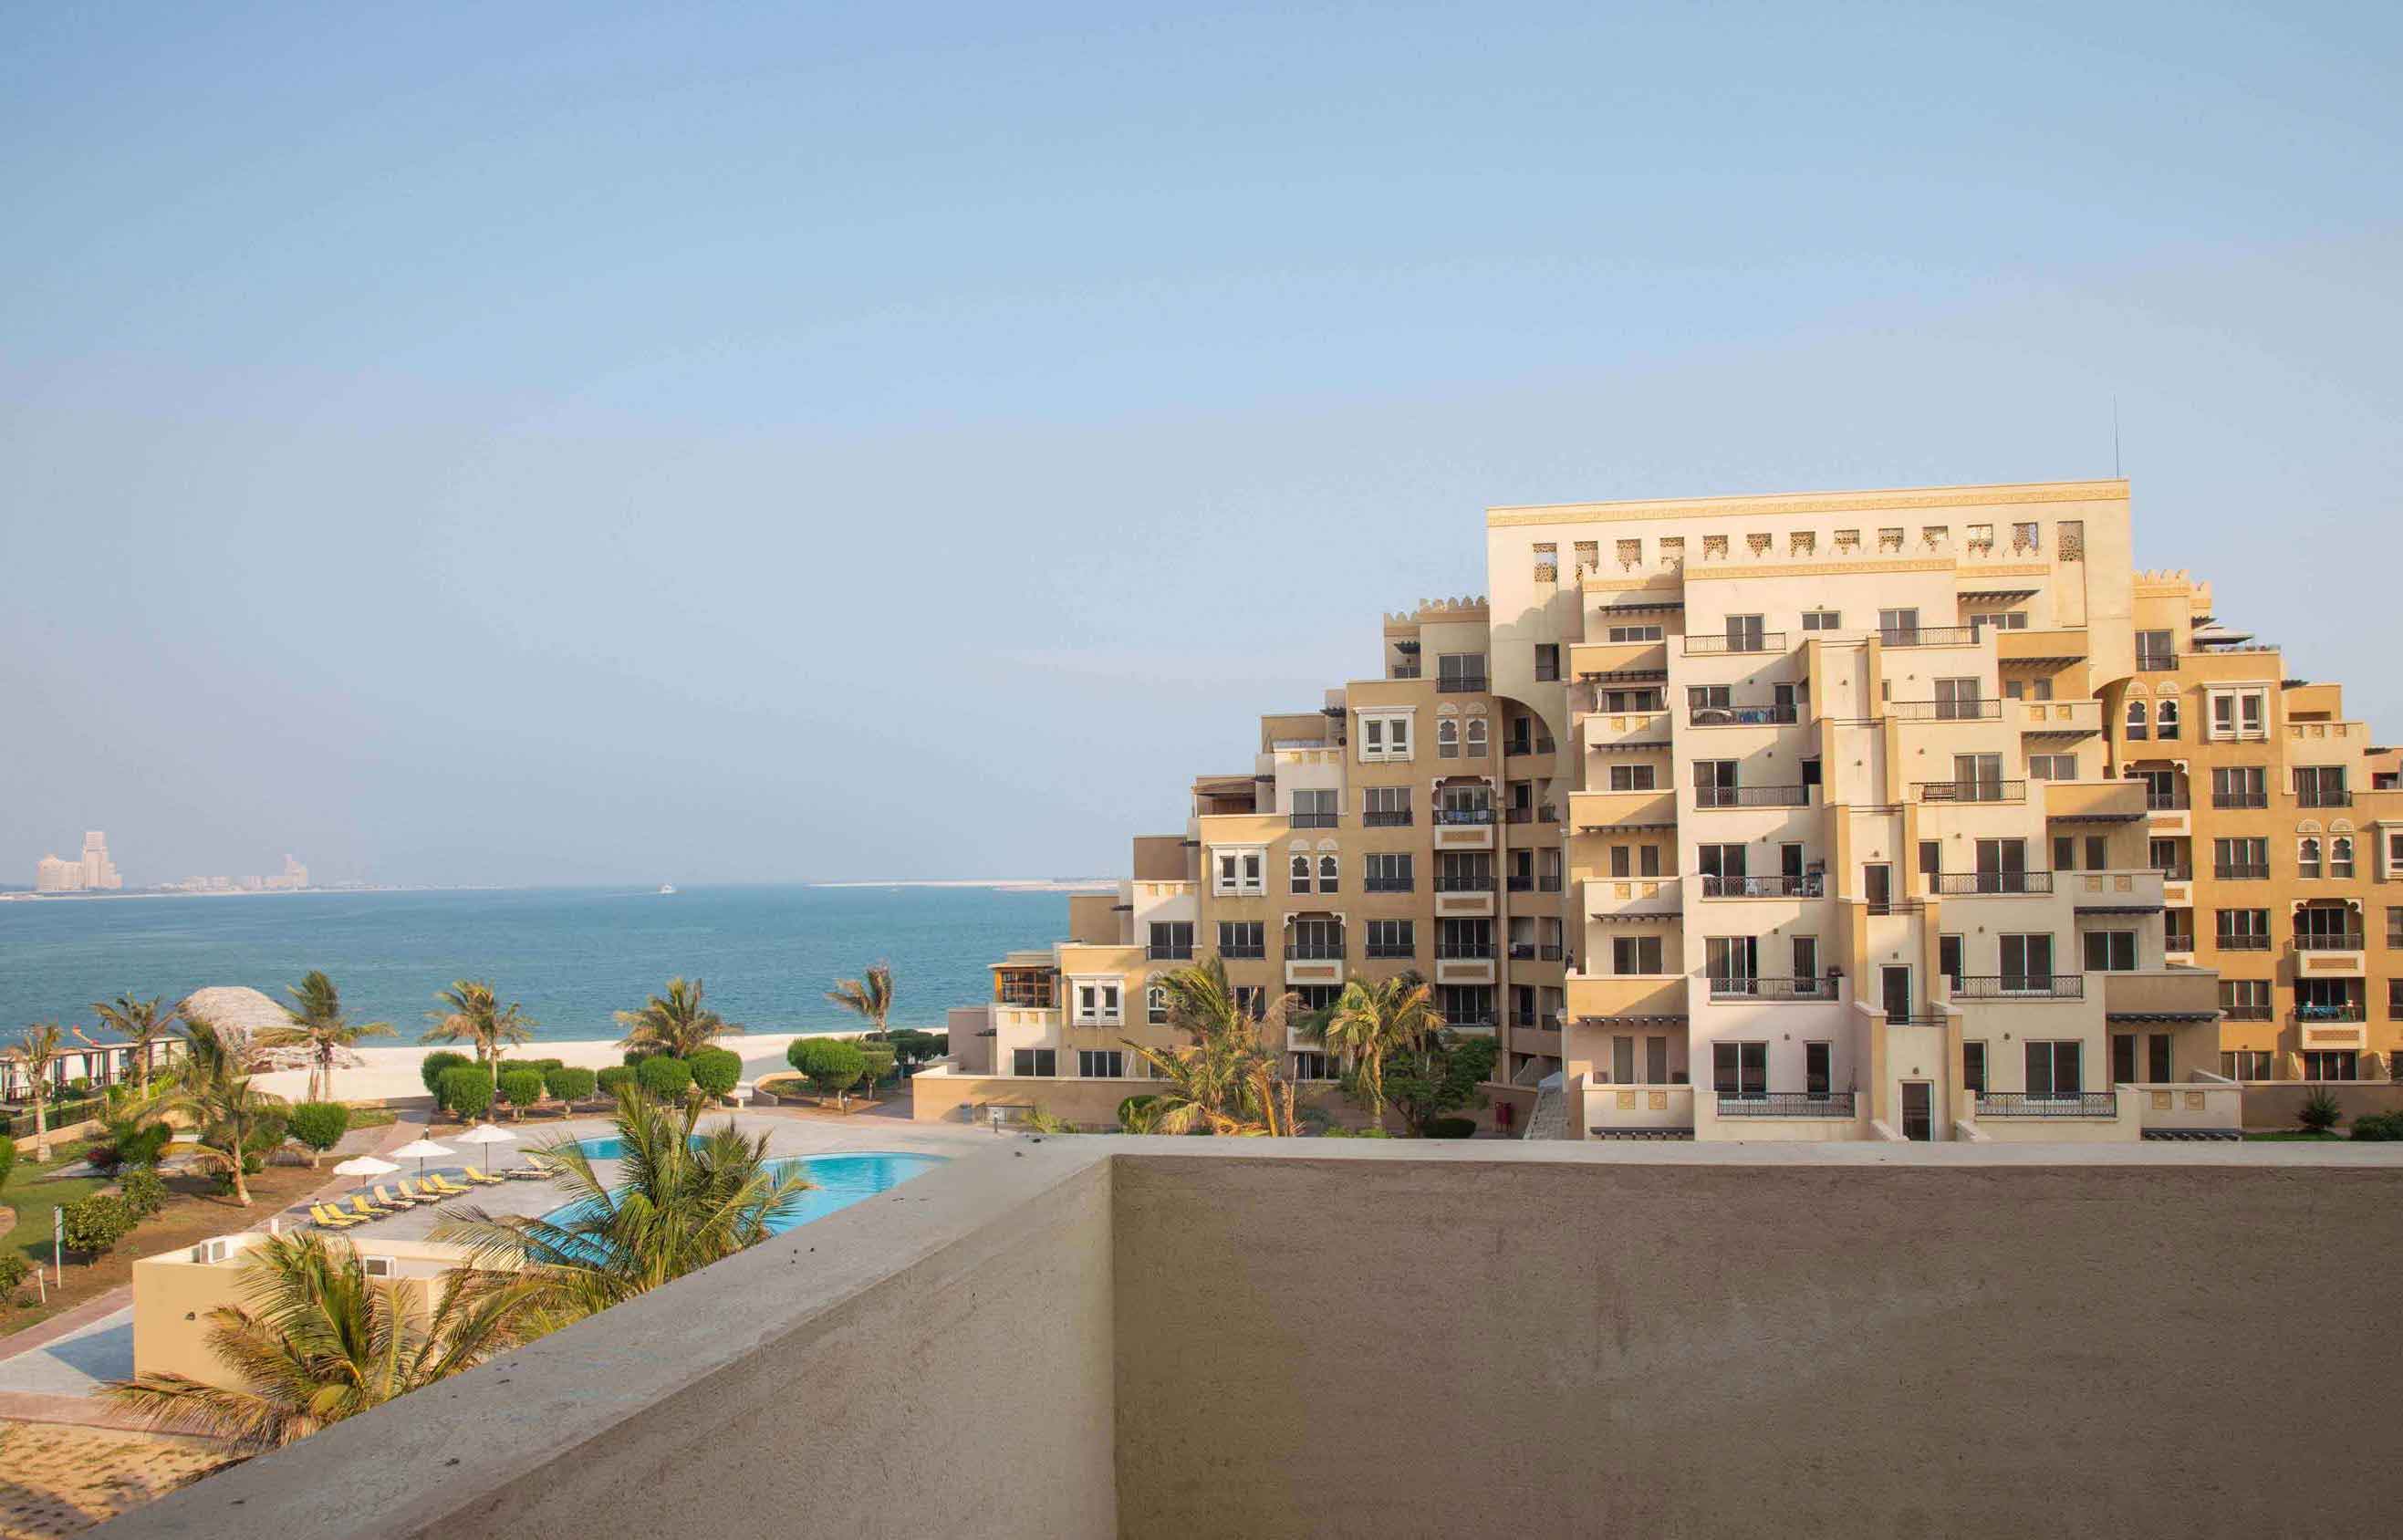 Properties for Sale by Al Hamra – About Developer, Real Estate in Ras Al Khaimah